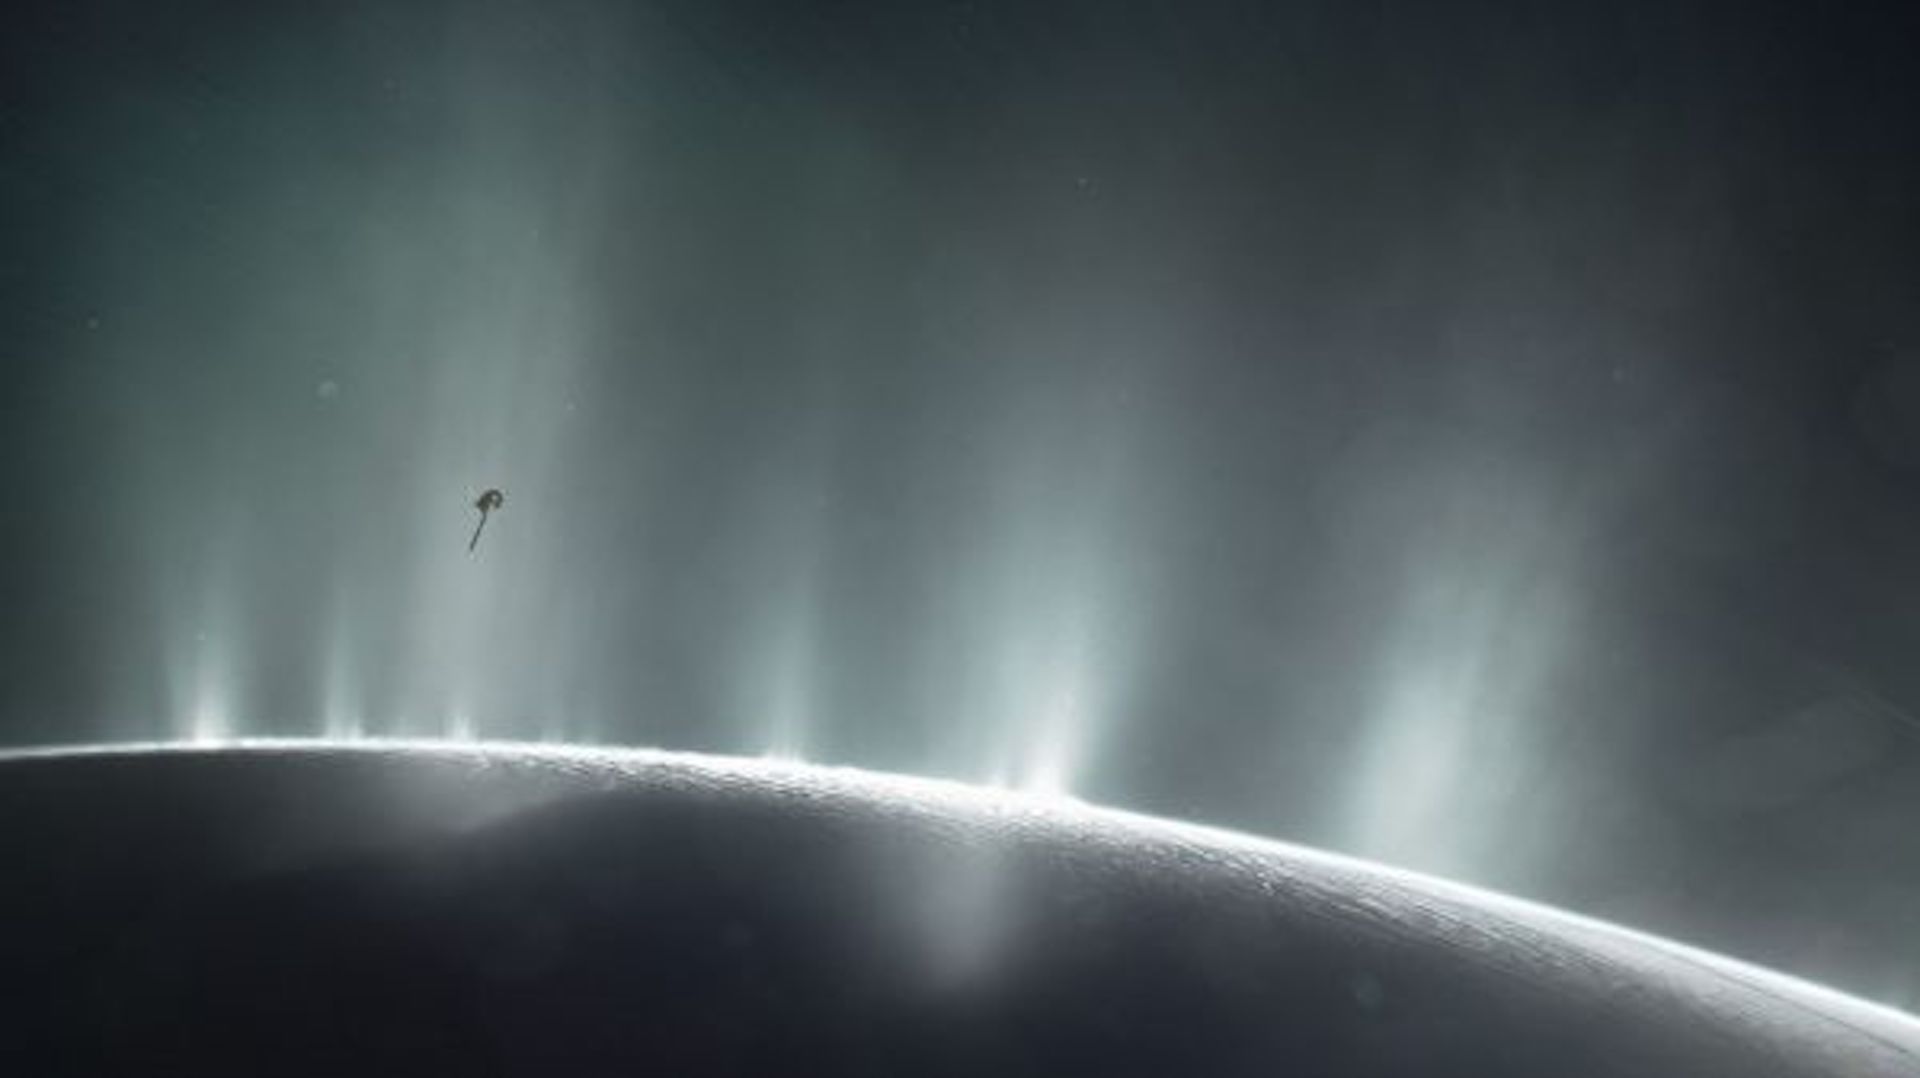 James Webb telescope discovers gargantuan geyser on Saturn's moon, blasting water hundreds of miles into space thumbnail